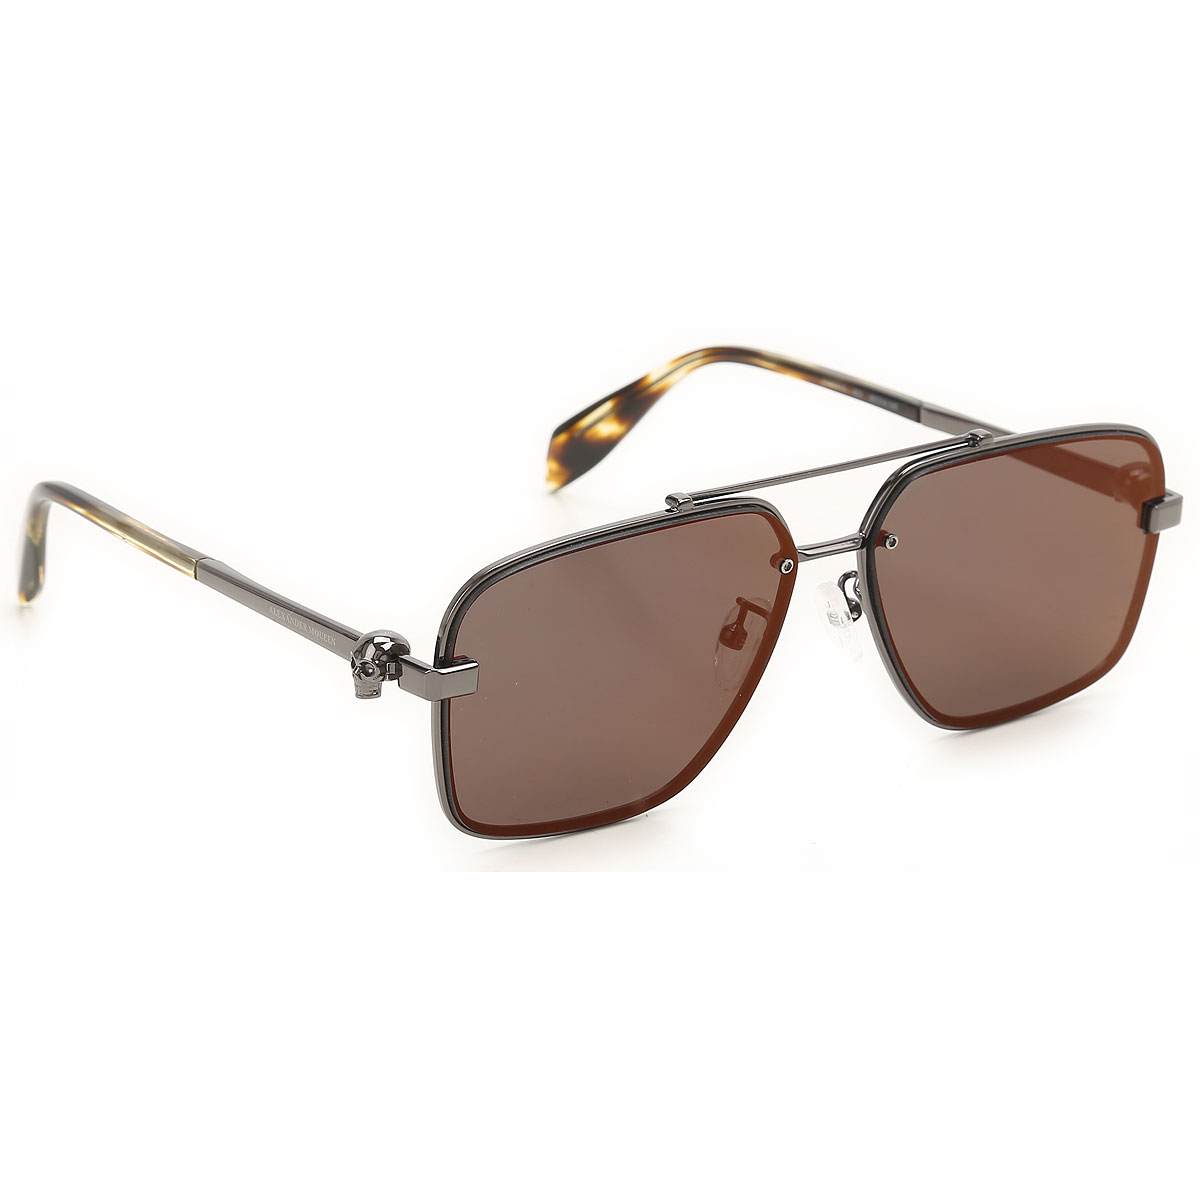 Sunglasses Alexander McQueen, Style code: am0081s-003-